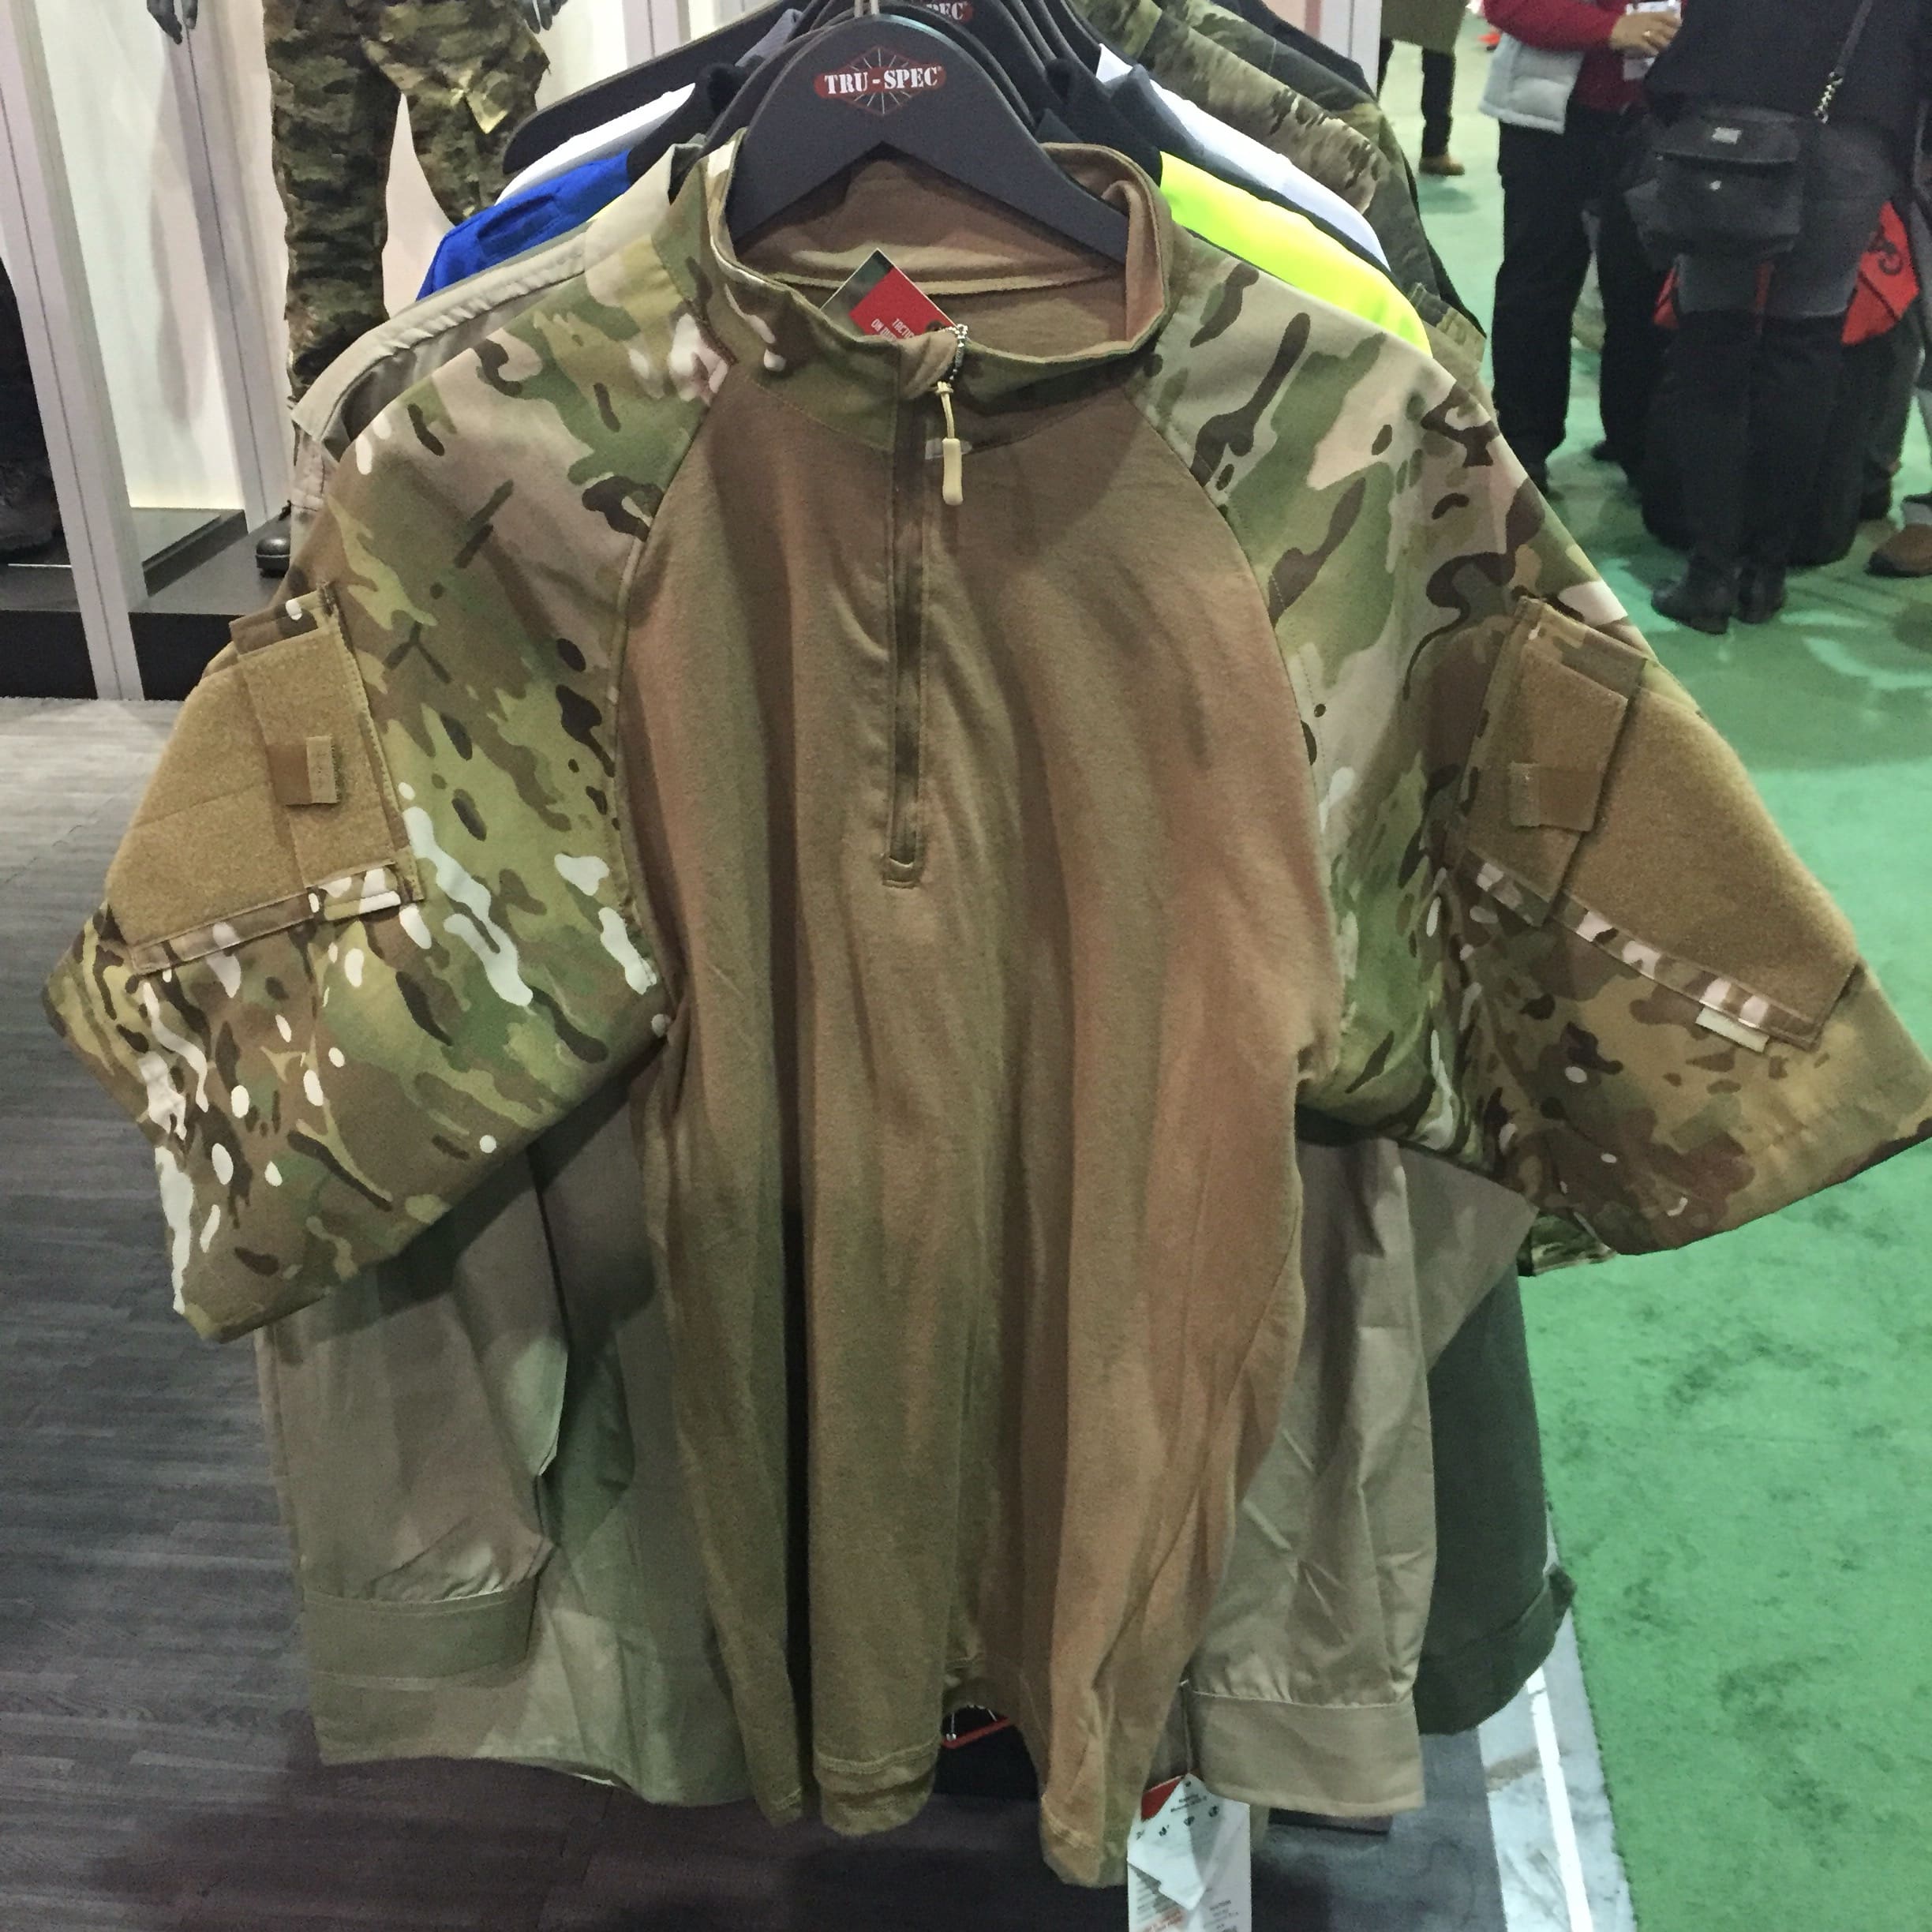 Post SHOT Show Wrapup – TRU-SPEC Short Sleeve Combat Shirt